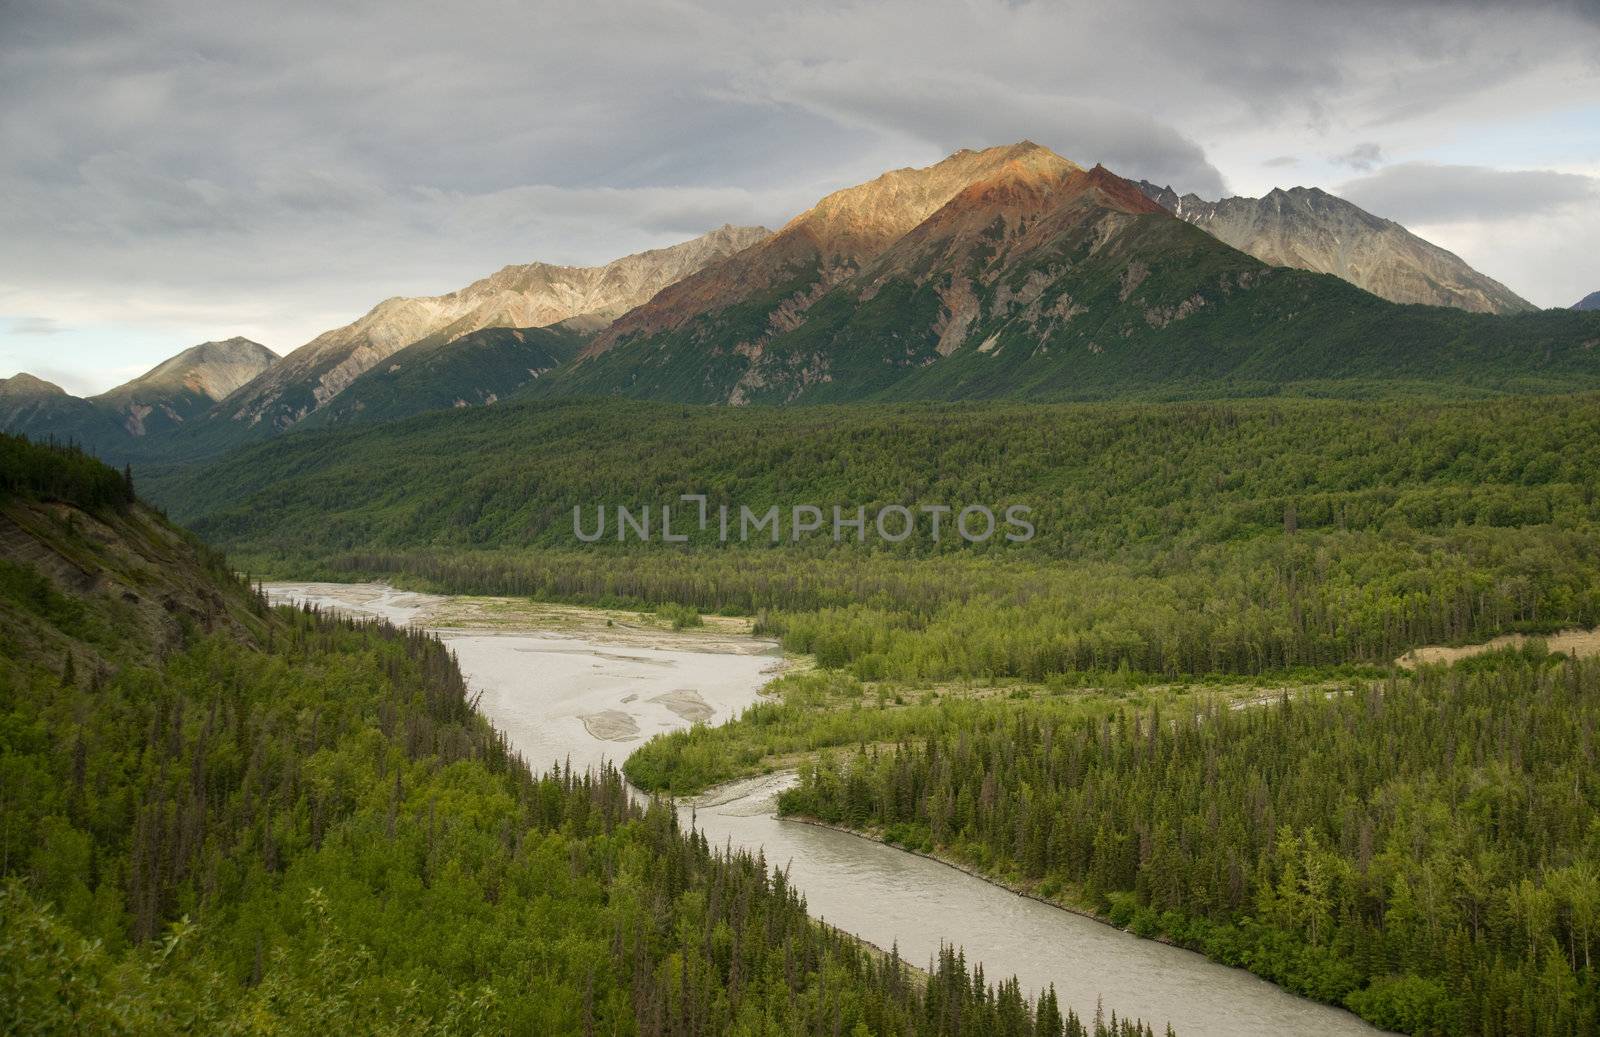 The Matanuska River cuts Through Woods at Chugach Mountains Base in Alaska